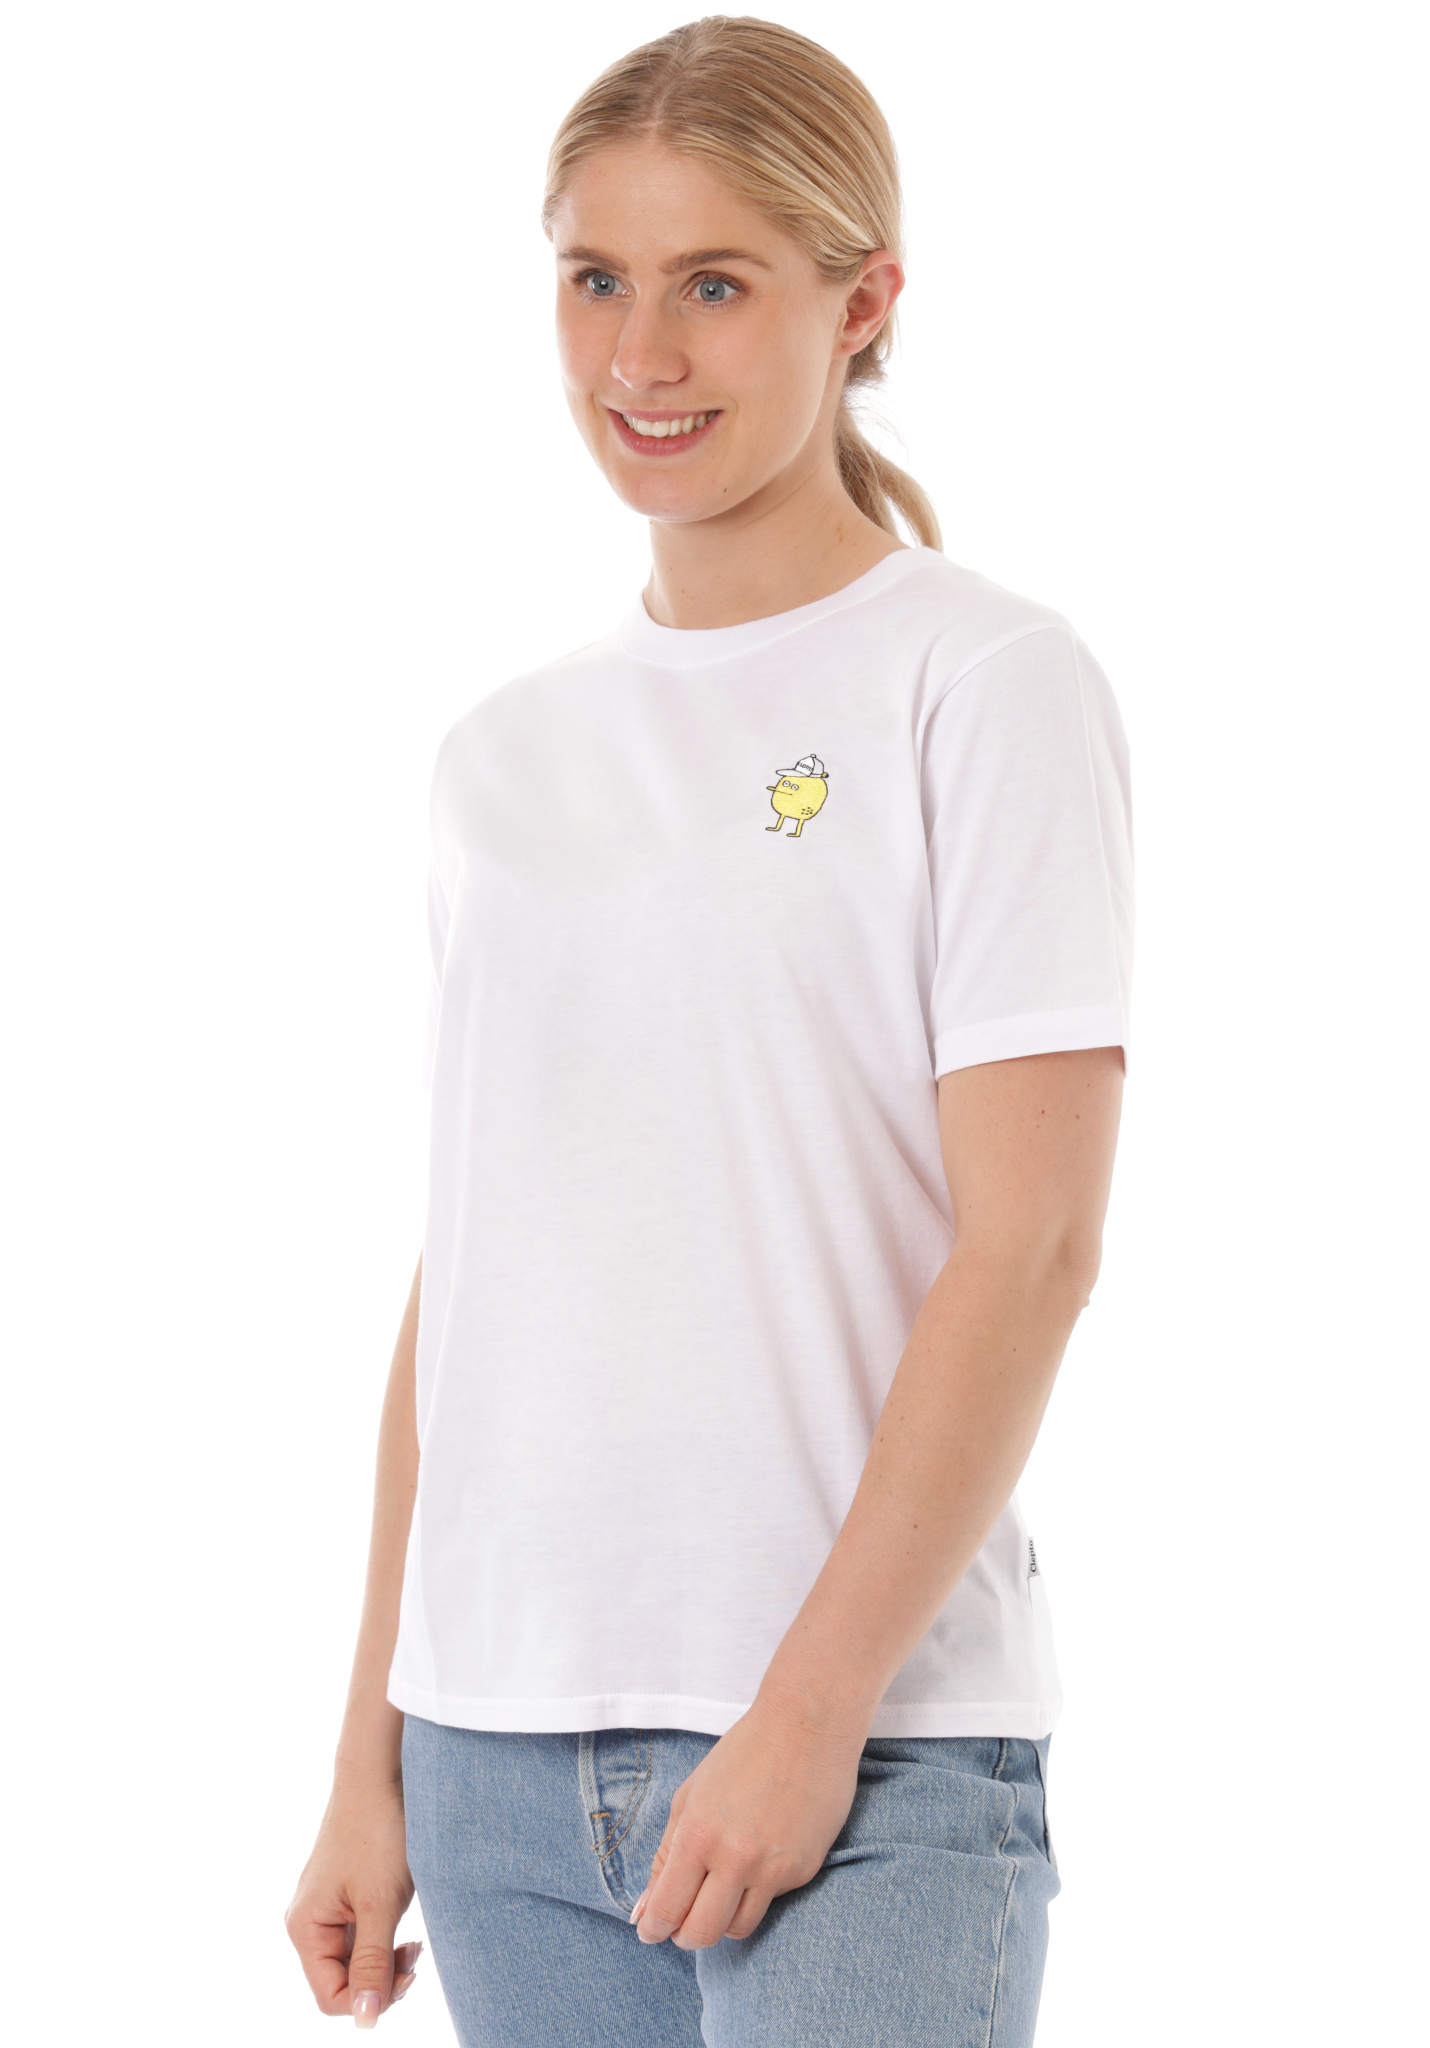 Cleptomanicx Embroidery Zitrone T-Shirt weiß S